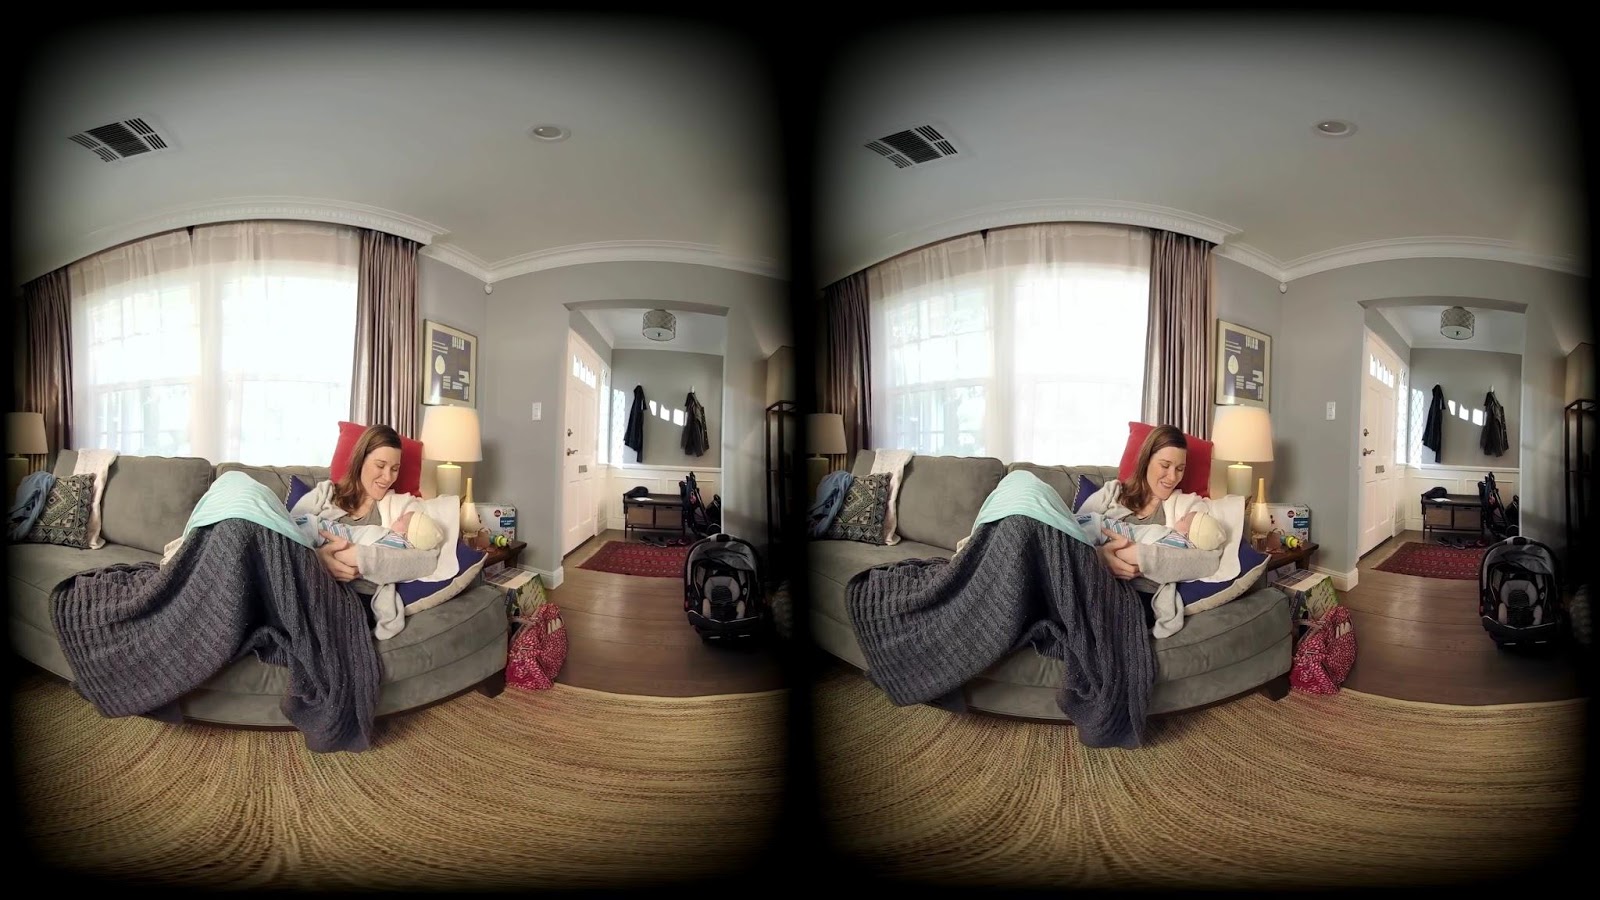 Будущее VR видео — VR180 от Google - 11